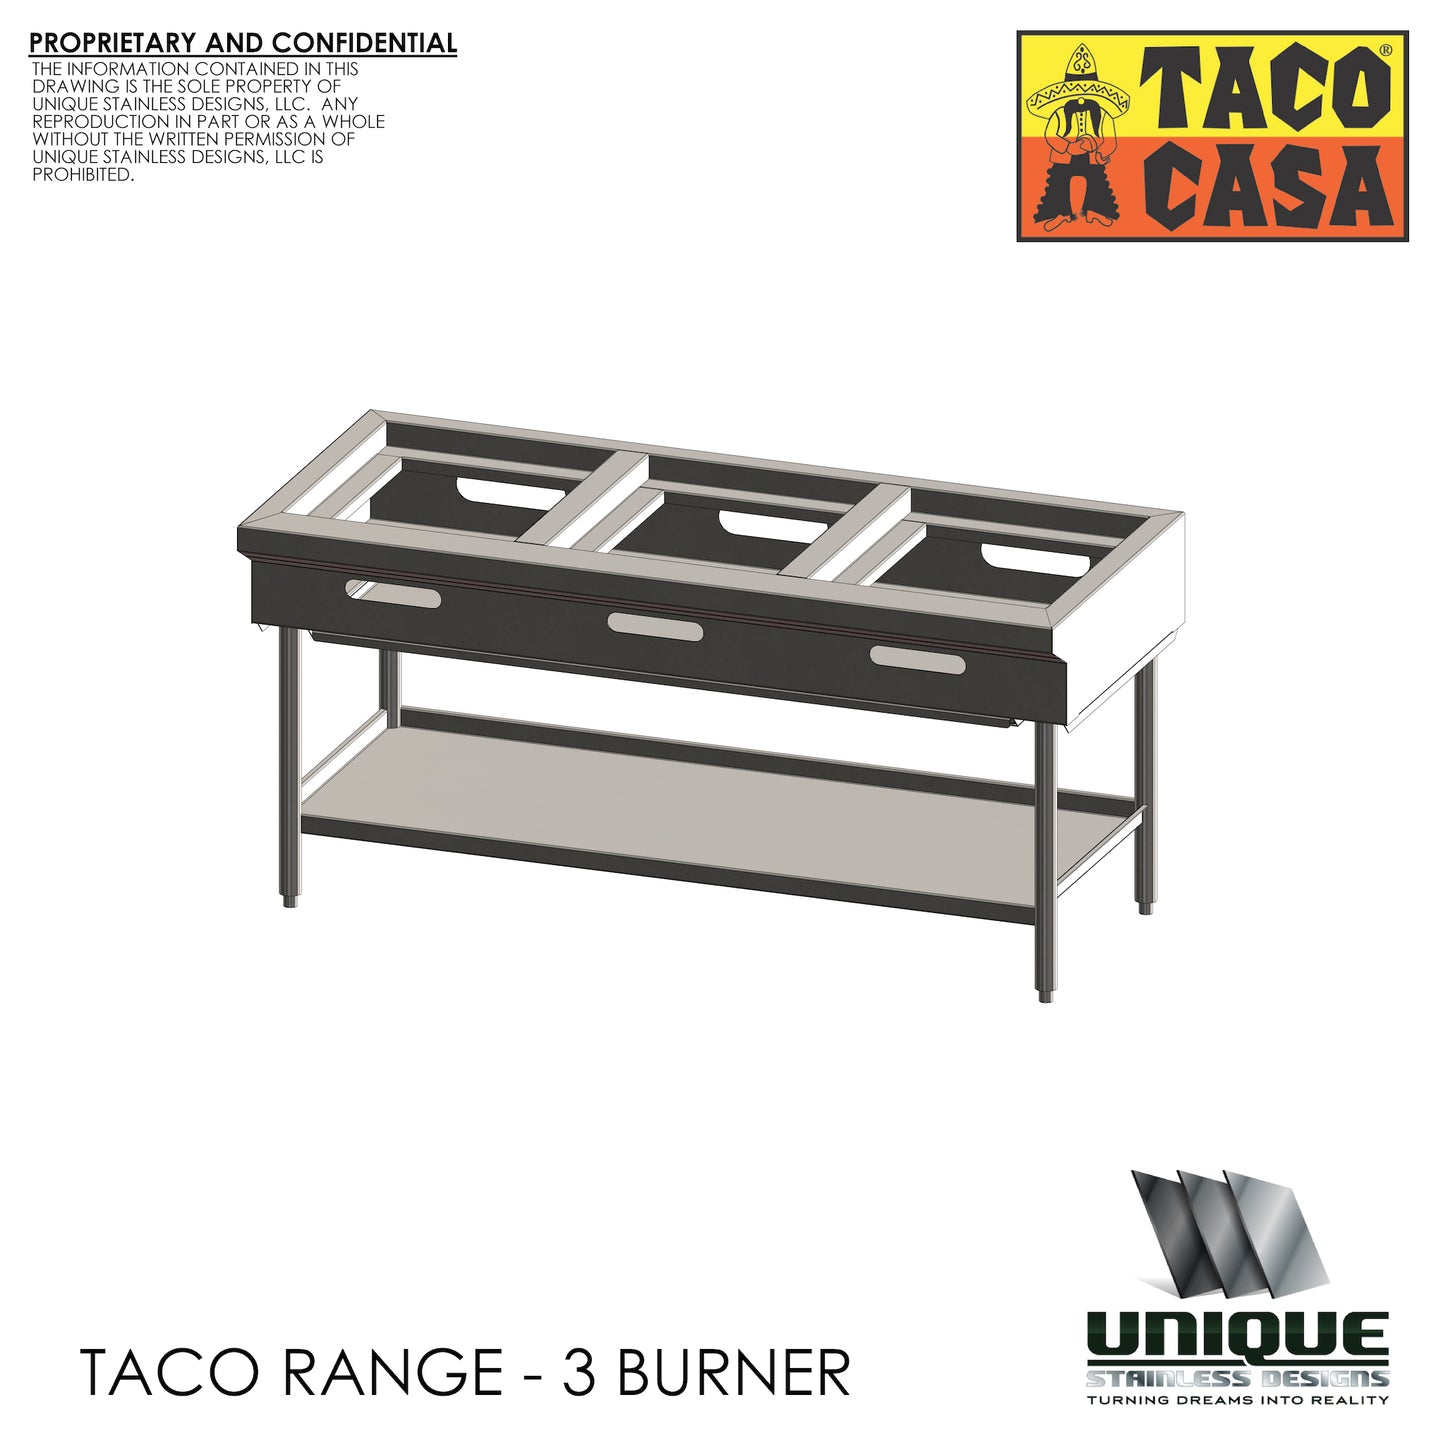 Taco Range - 3 Burner